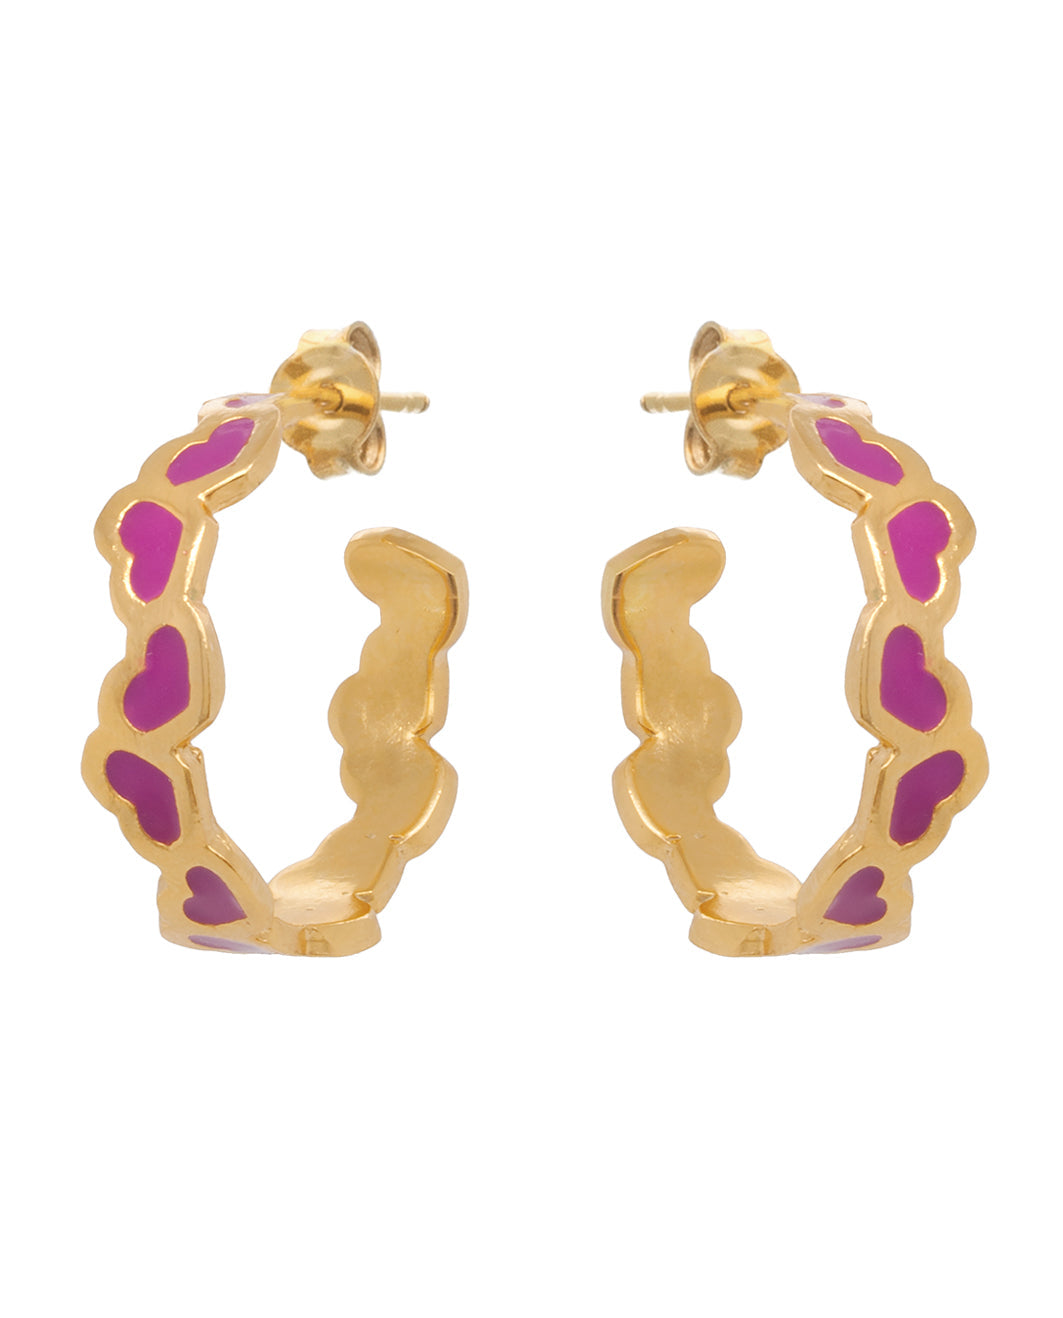 Kardoules earrings